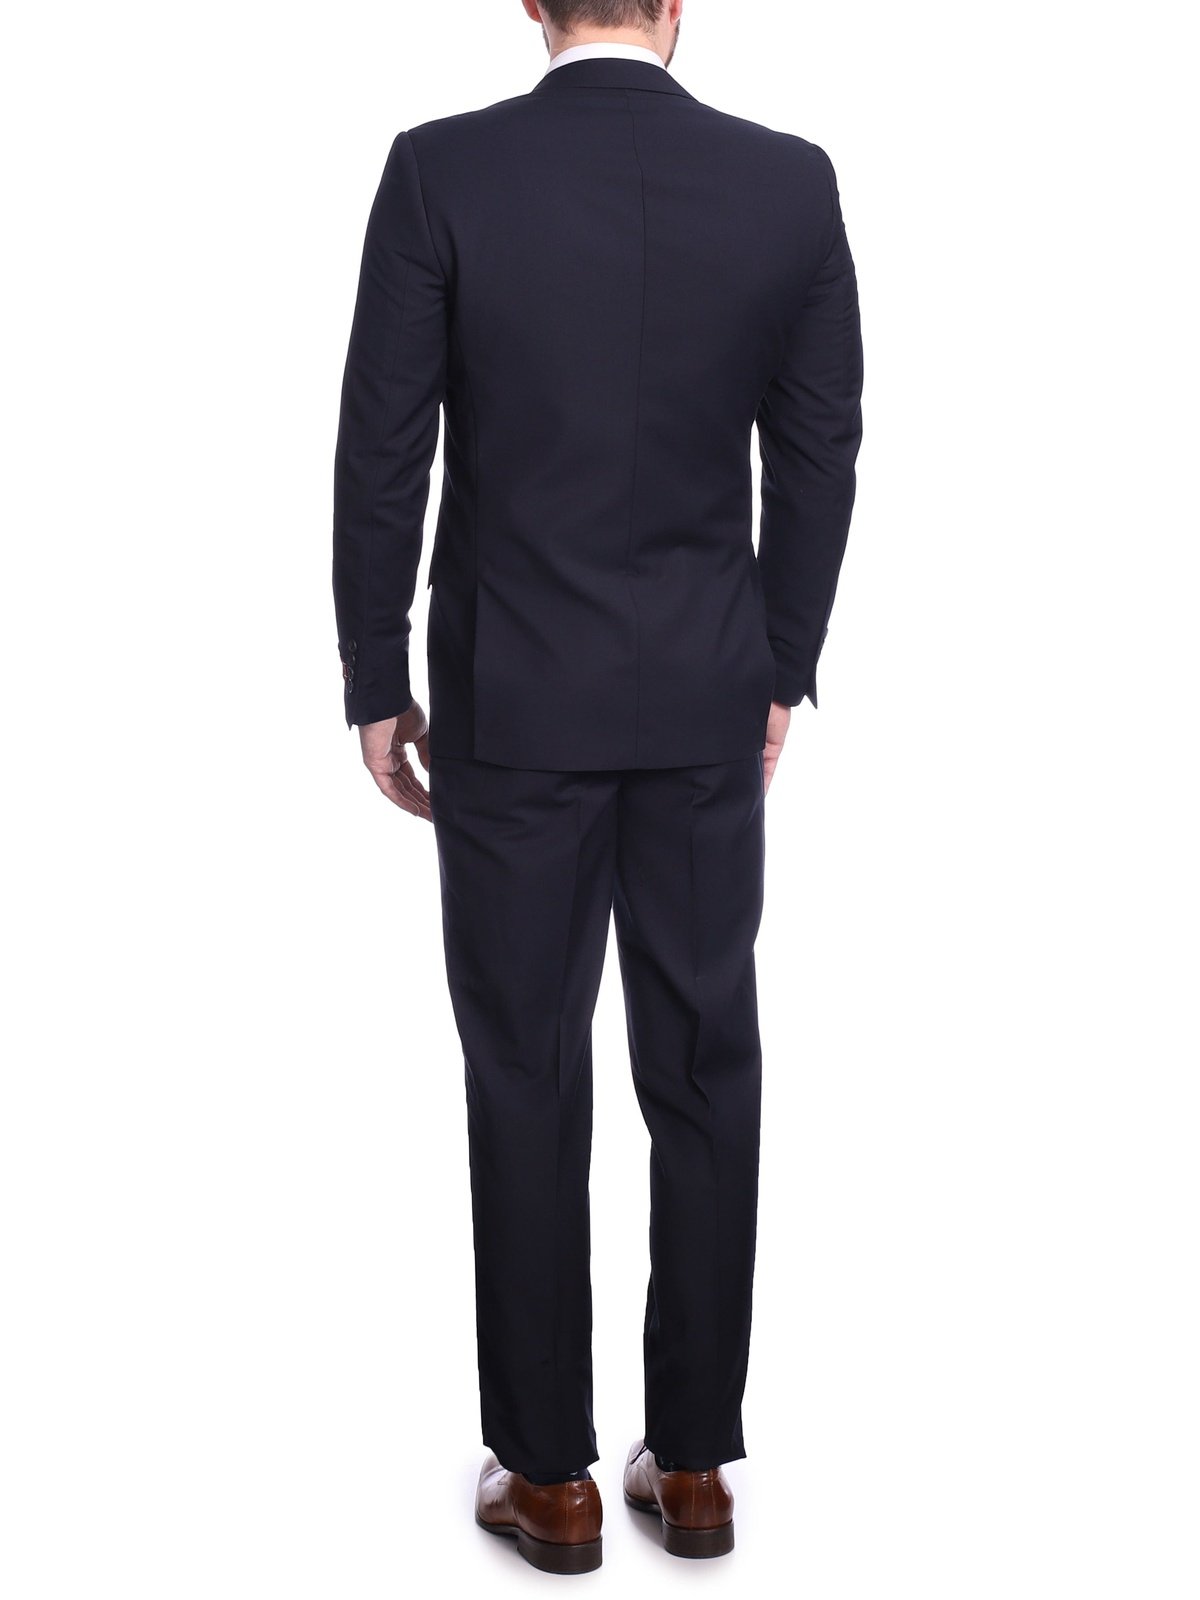 Men's Raphael Slim Fit Solid Navy Blue Wool-touch Two Button 2 Piece Suit